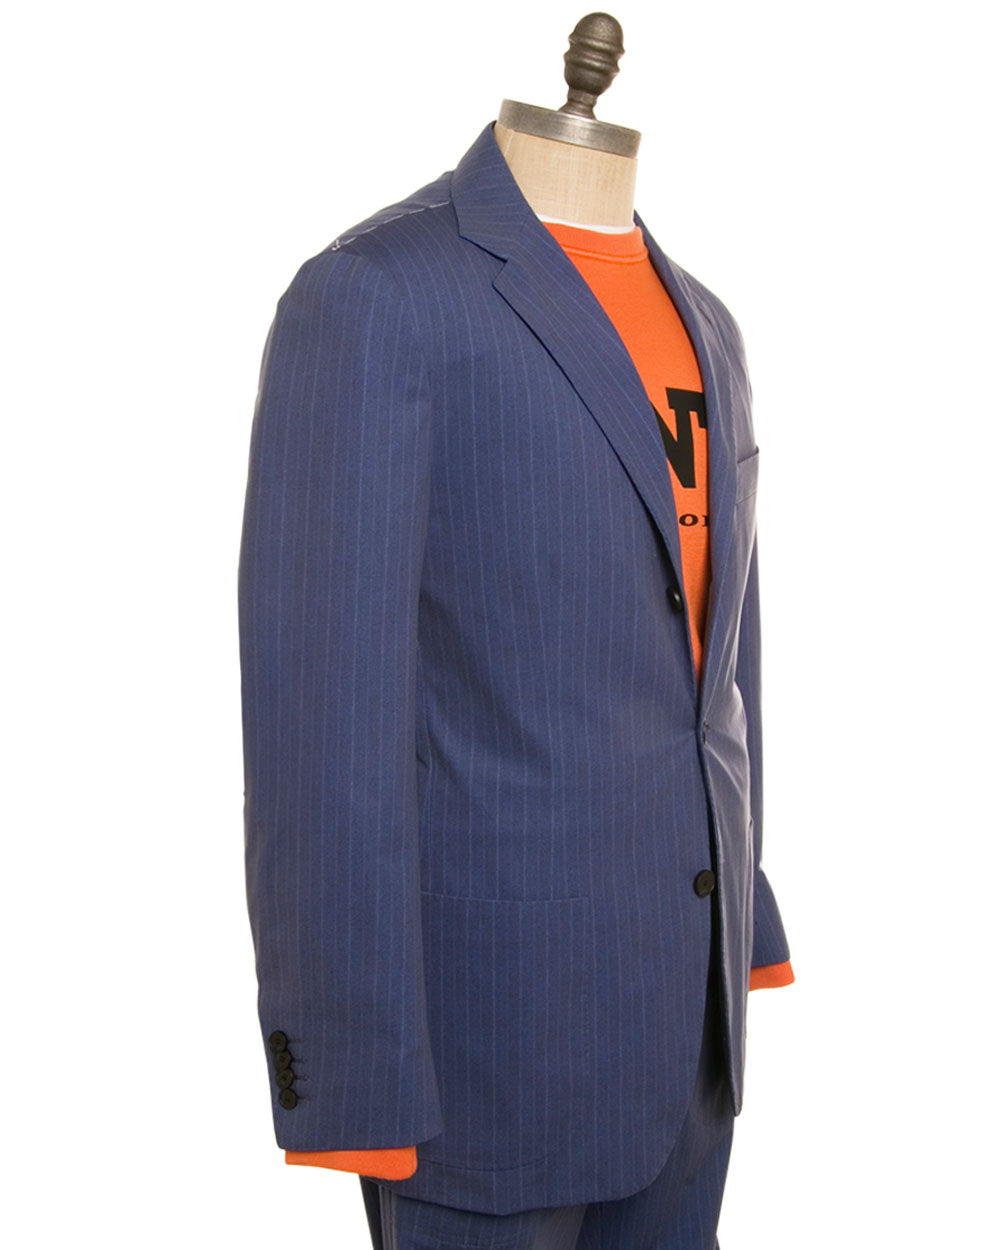 High Blue Tech Pinstripe Suit